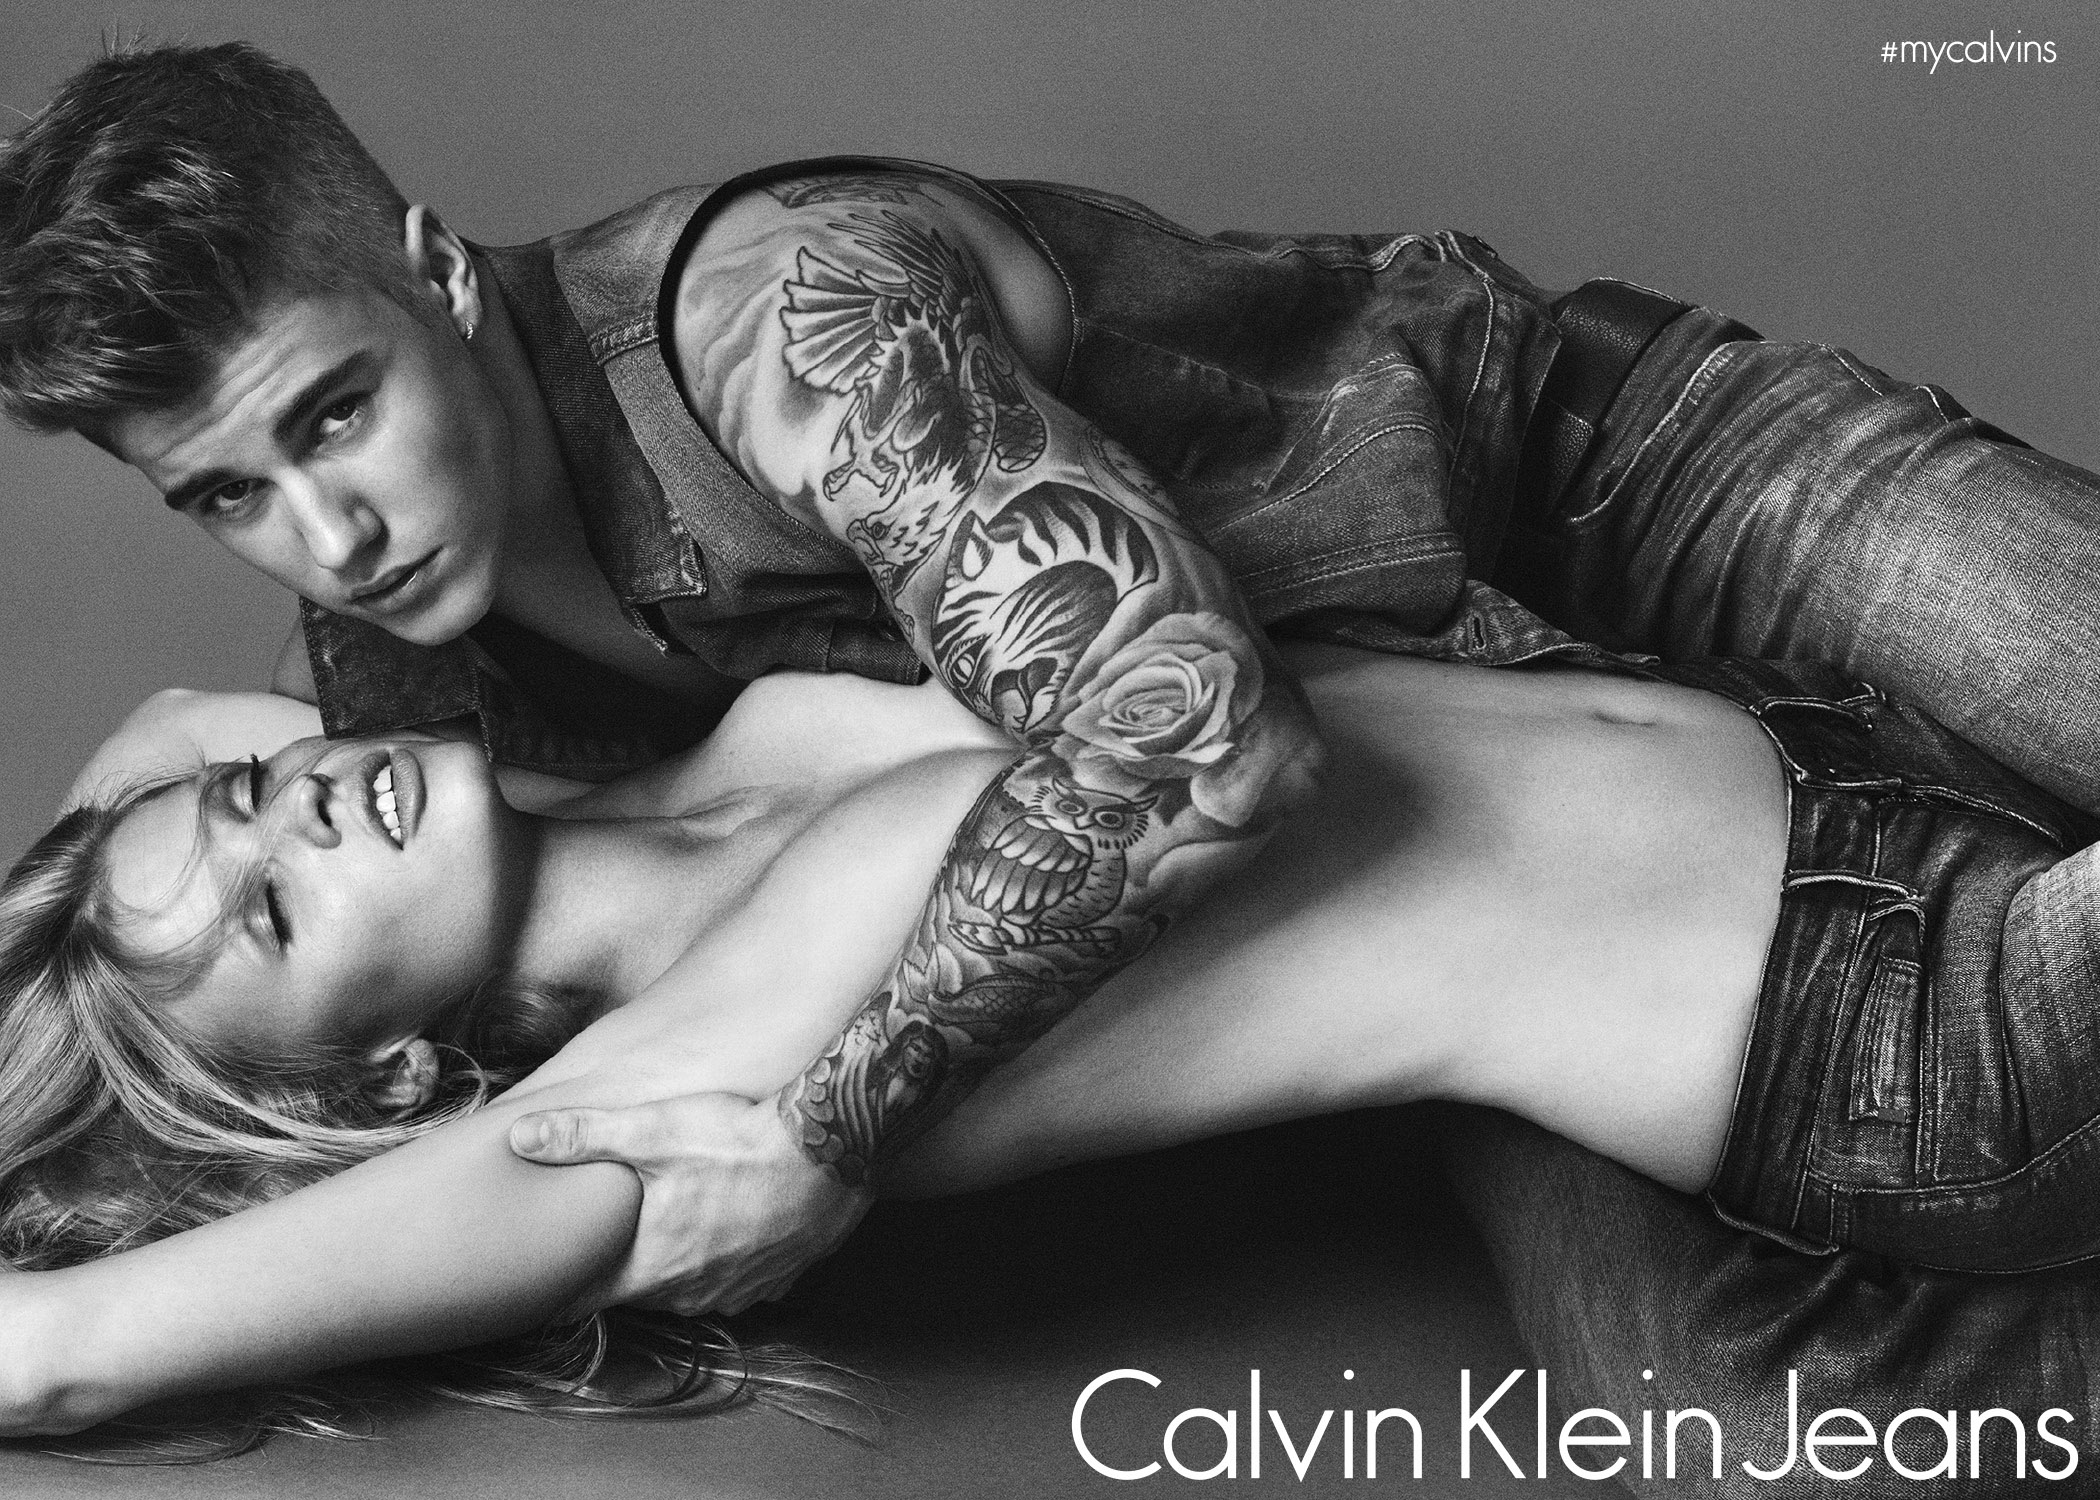 Justin Bieber X Calvin Klein, Buy Now, Online, 50% OFF, osatokisalud.com